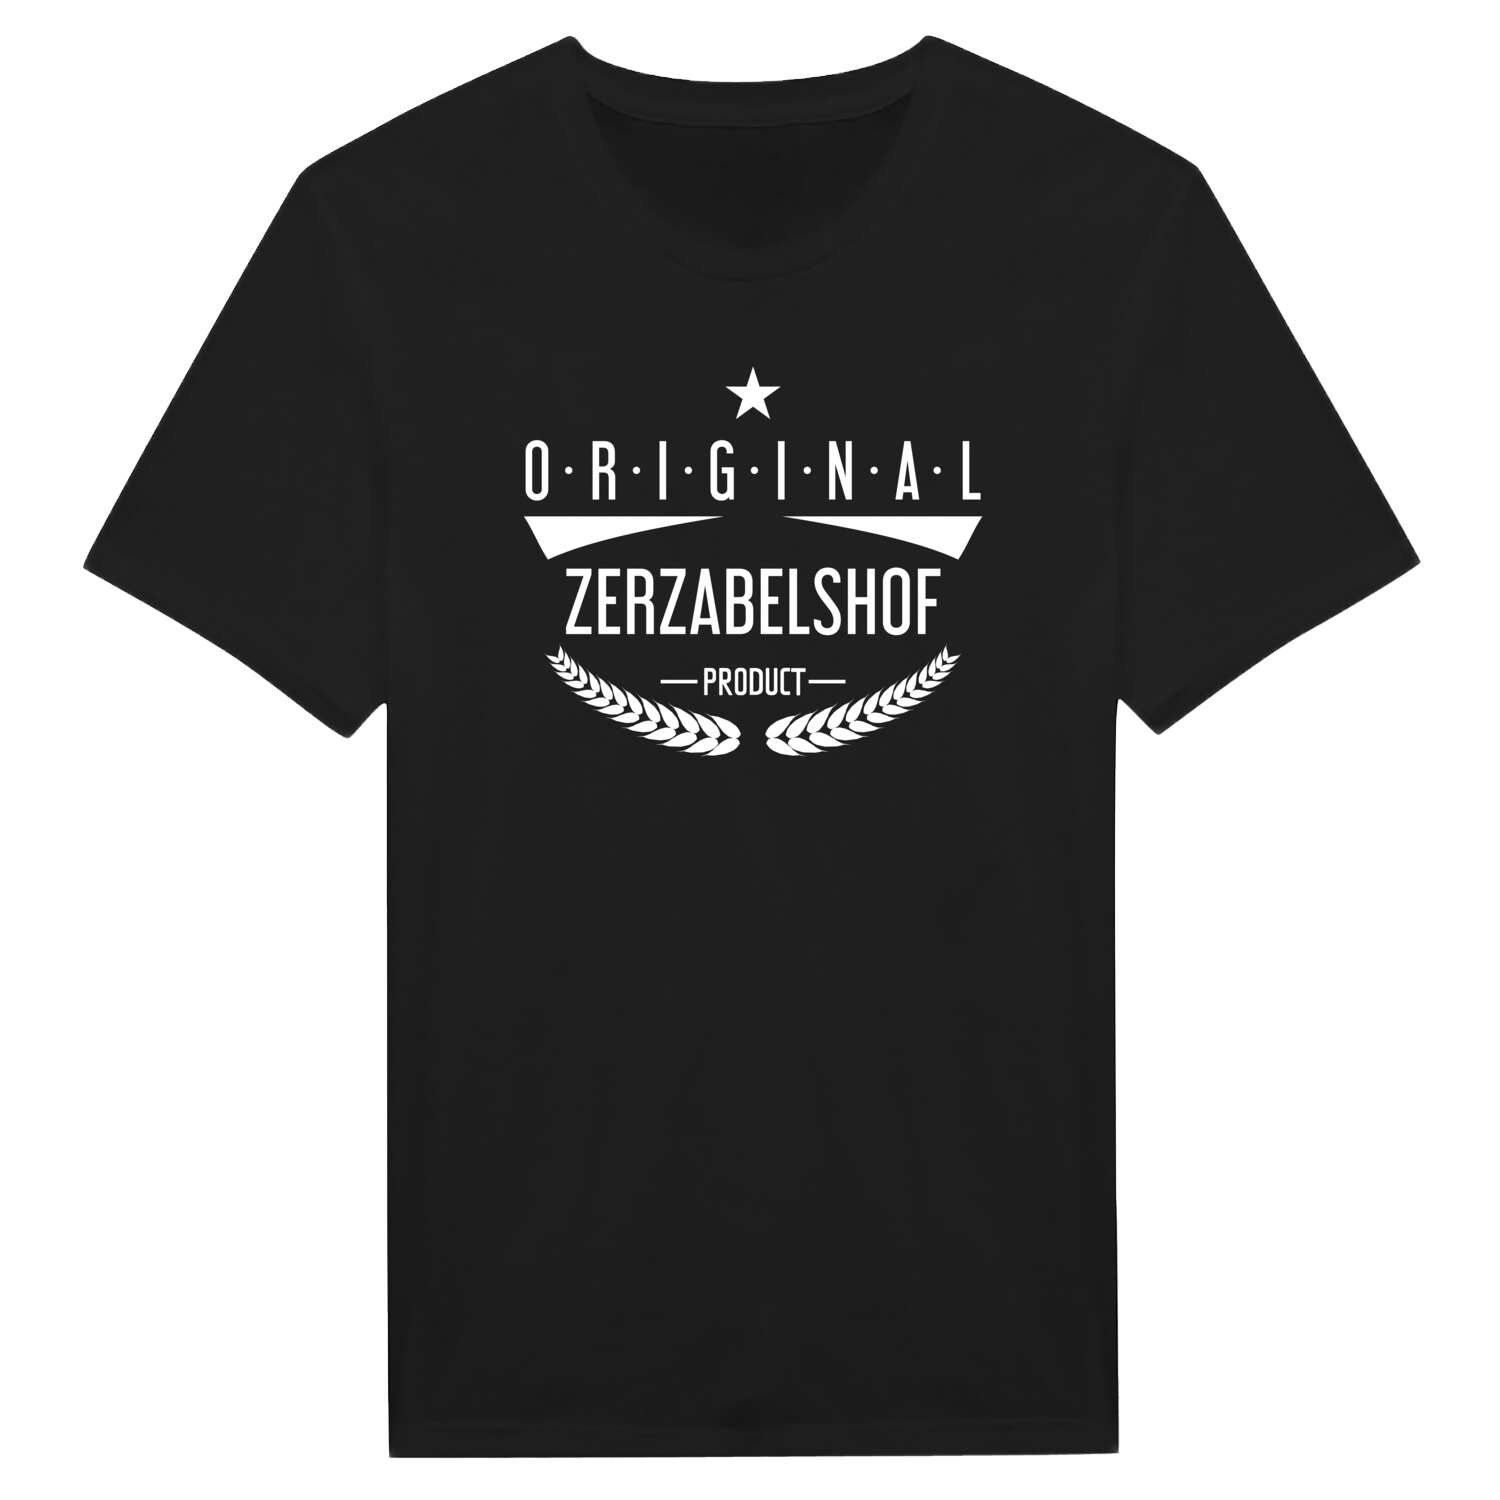 Zerzabelshof T-Shirt »Original Product«